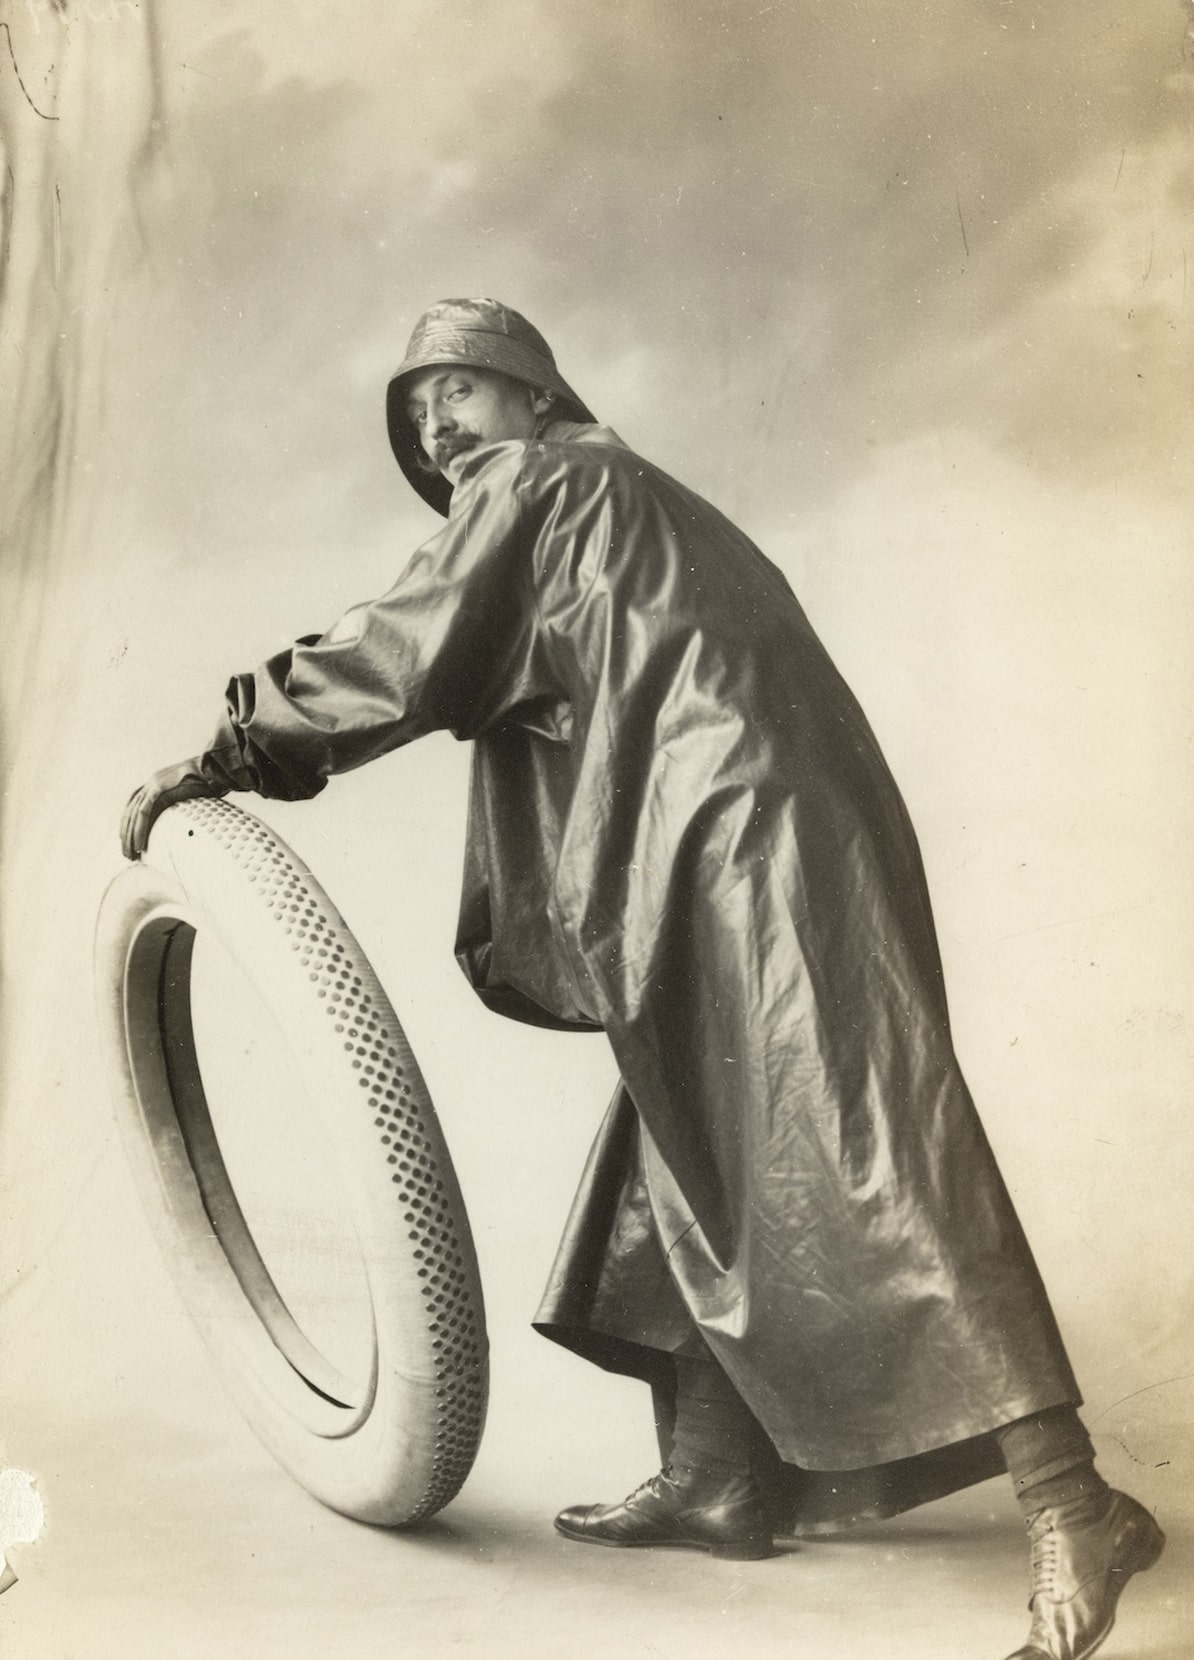 Fotografía para un cartel de neumáticos. Gráficas Seix & Barral Hermanos, 1909